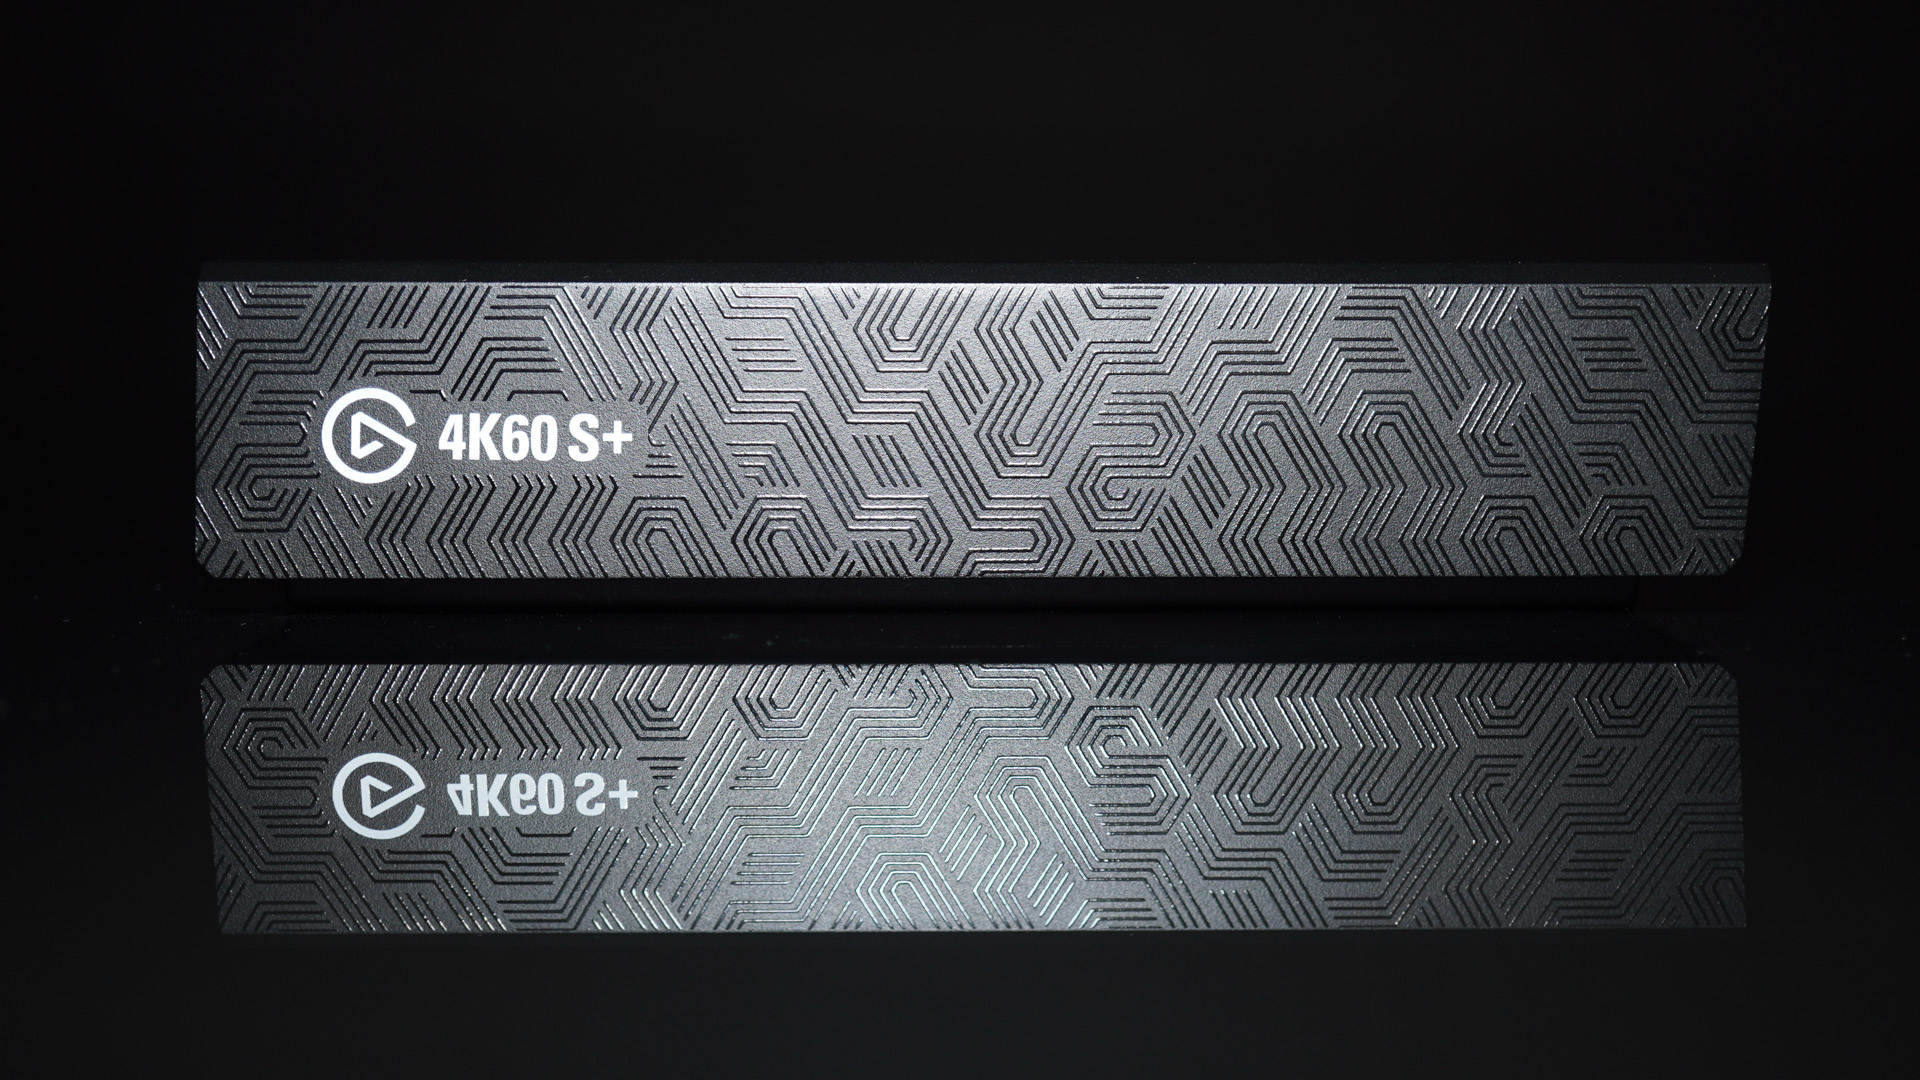 直录4K HDR最强武器 - Elgato 4K60 S+采集盒